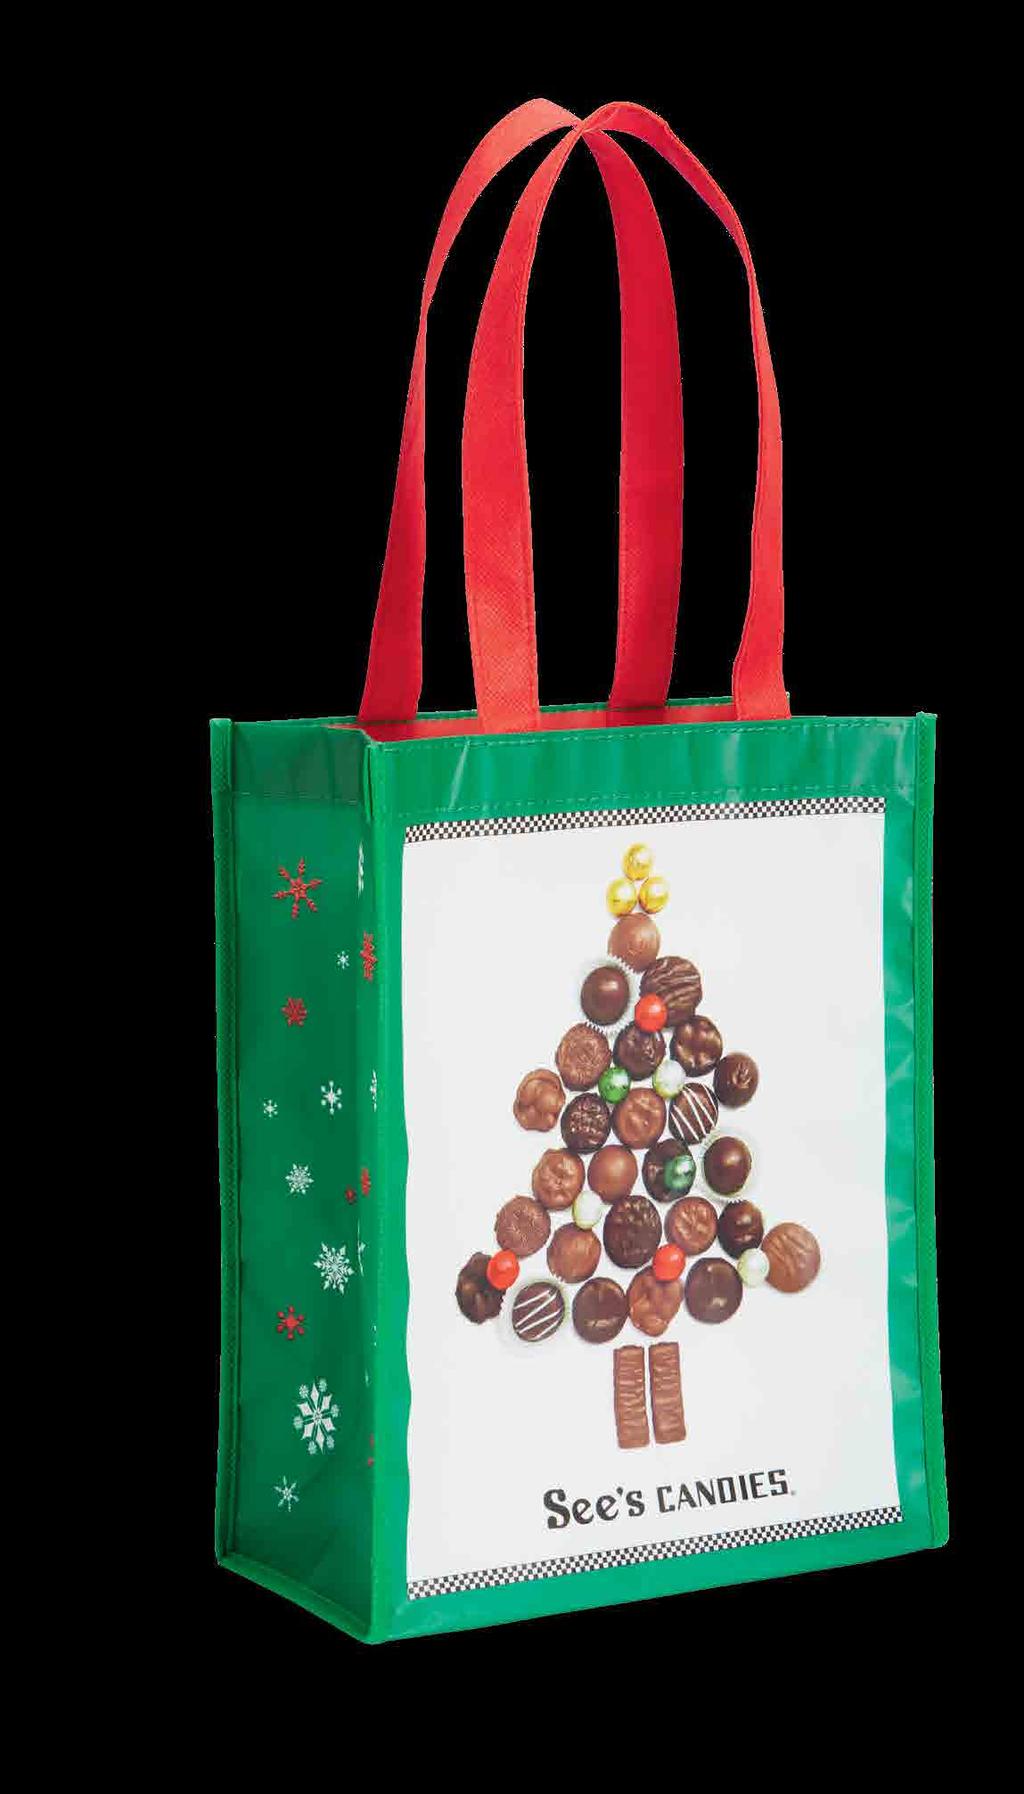 Pick up a single-flavor box of Chocolate Walnut, Vanilla Walnut or Bordeaux